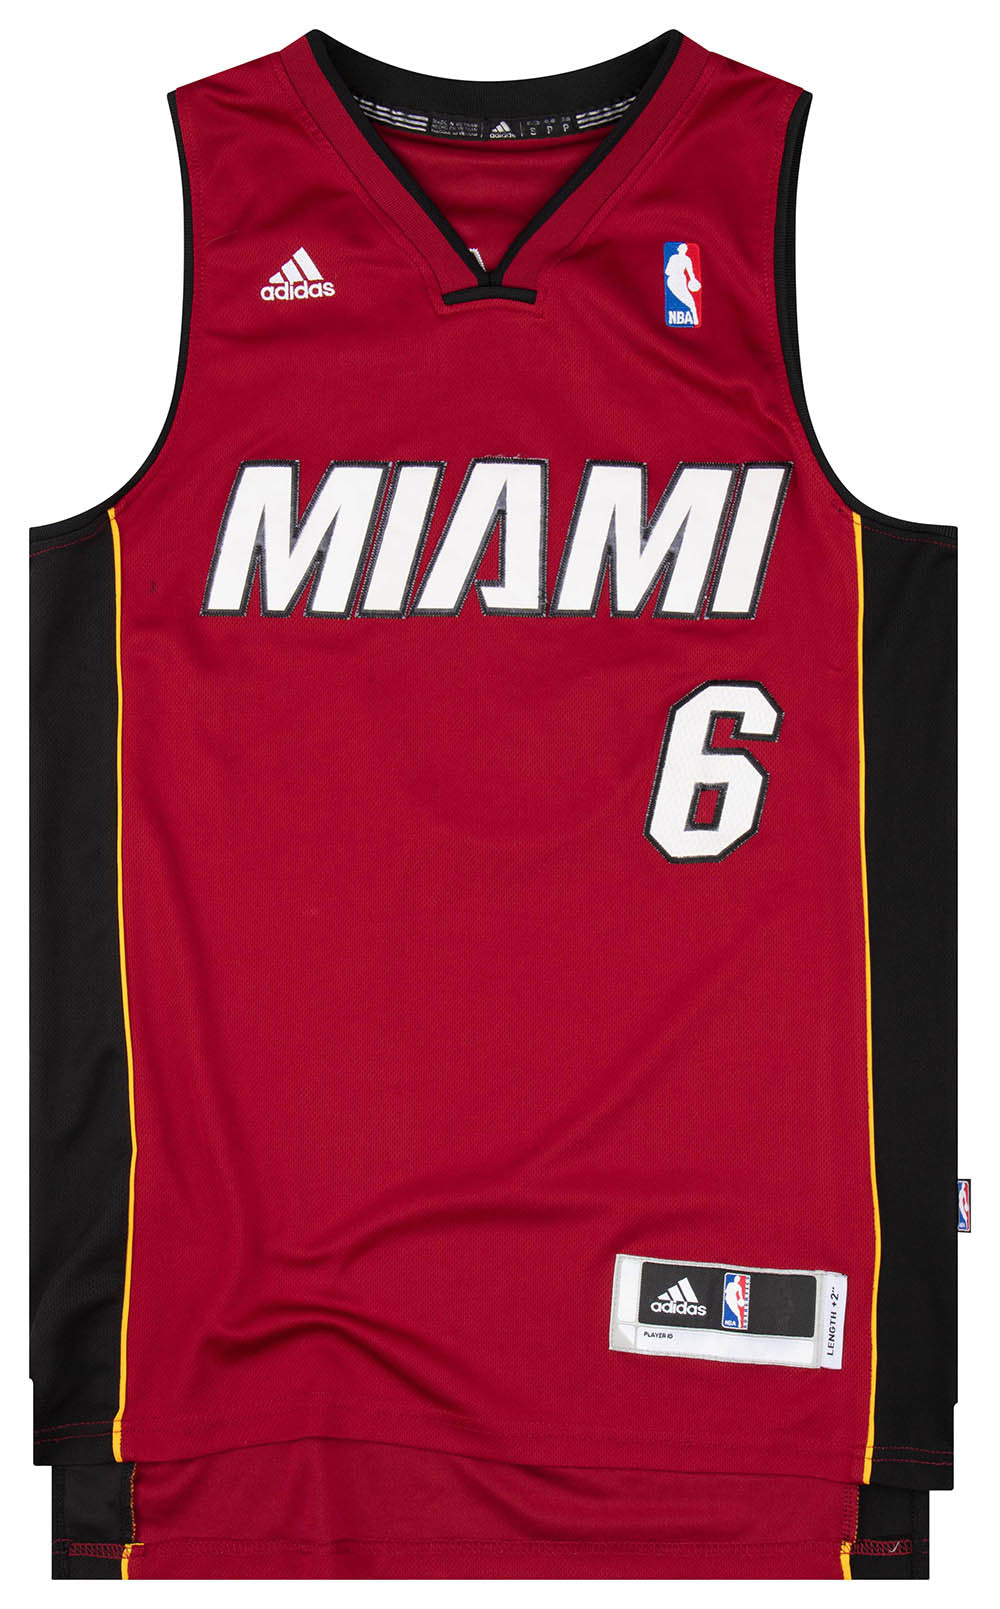 Adidas Miami Heat Jersey Womens Large Black Red Lebron James NBA